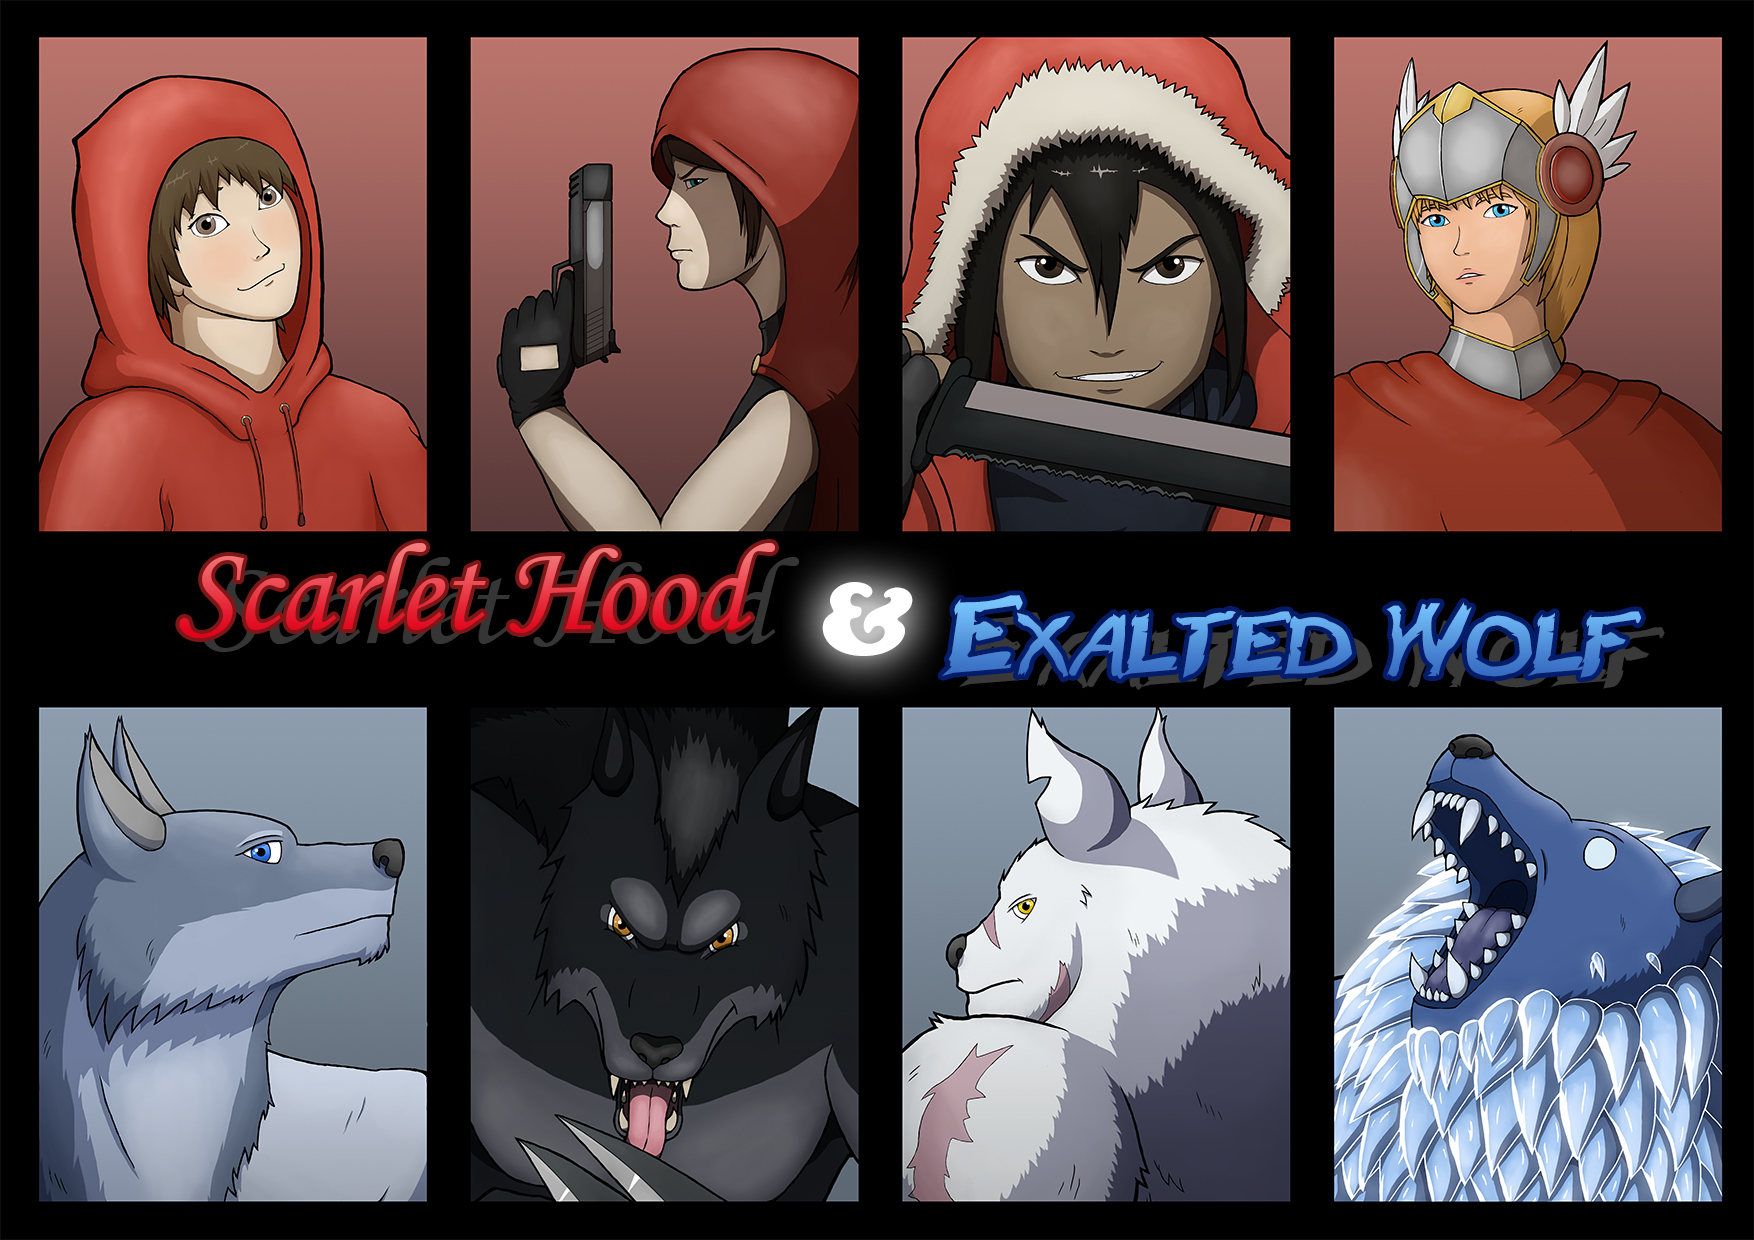 scarlet_hood_and_exalted_wolf_by_grimgor09-d8bksp2.jpg